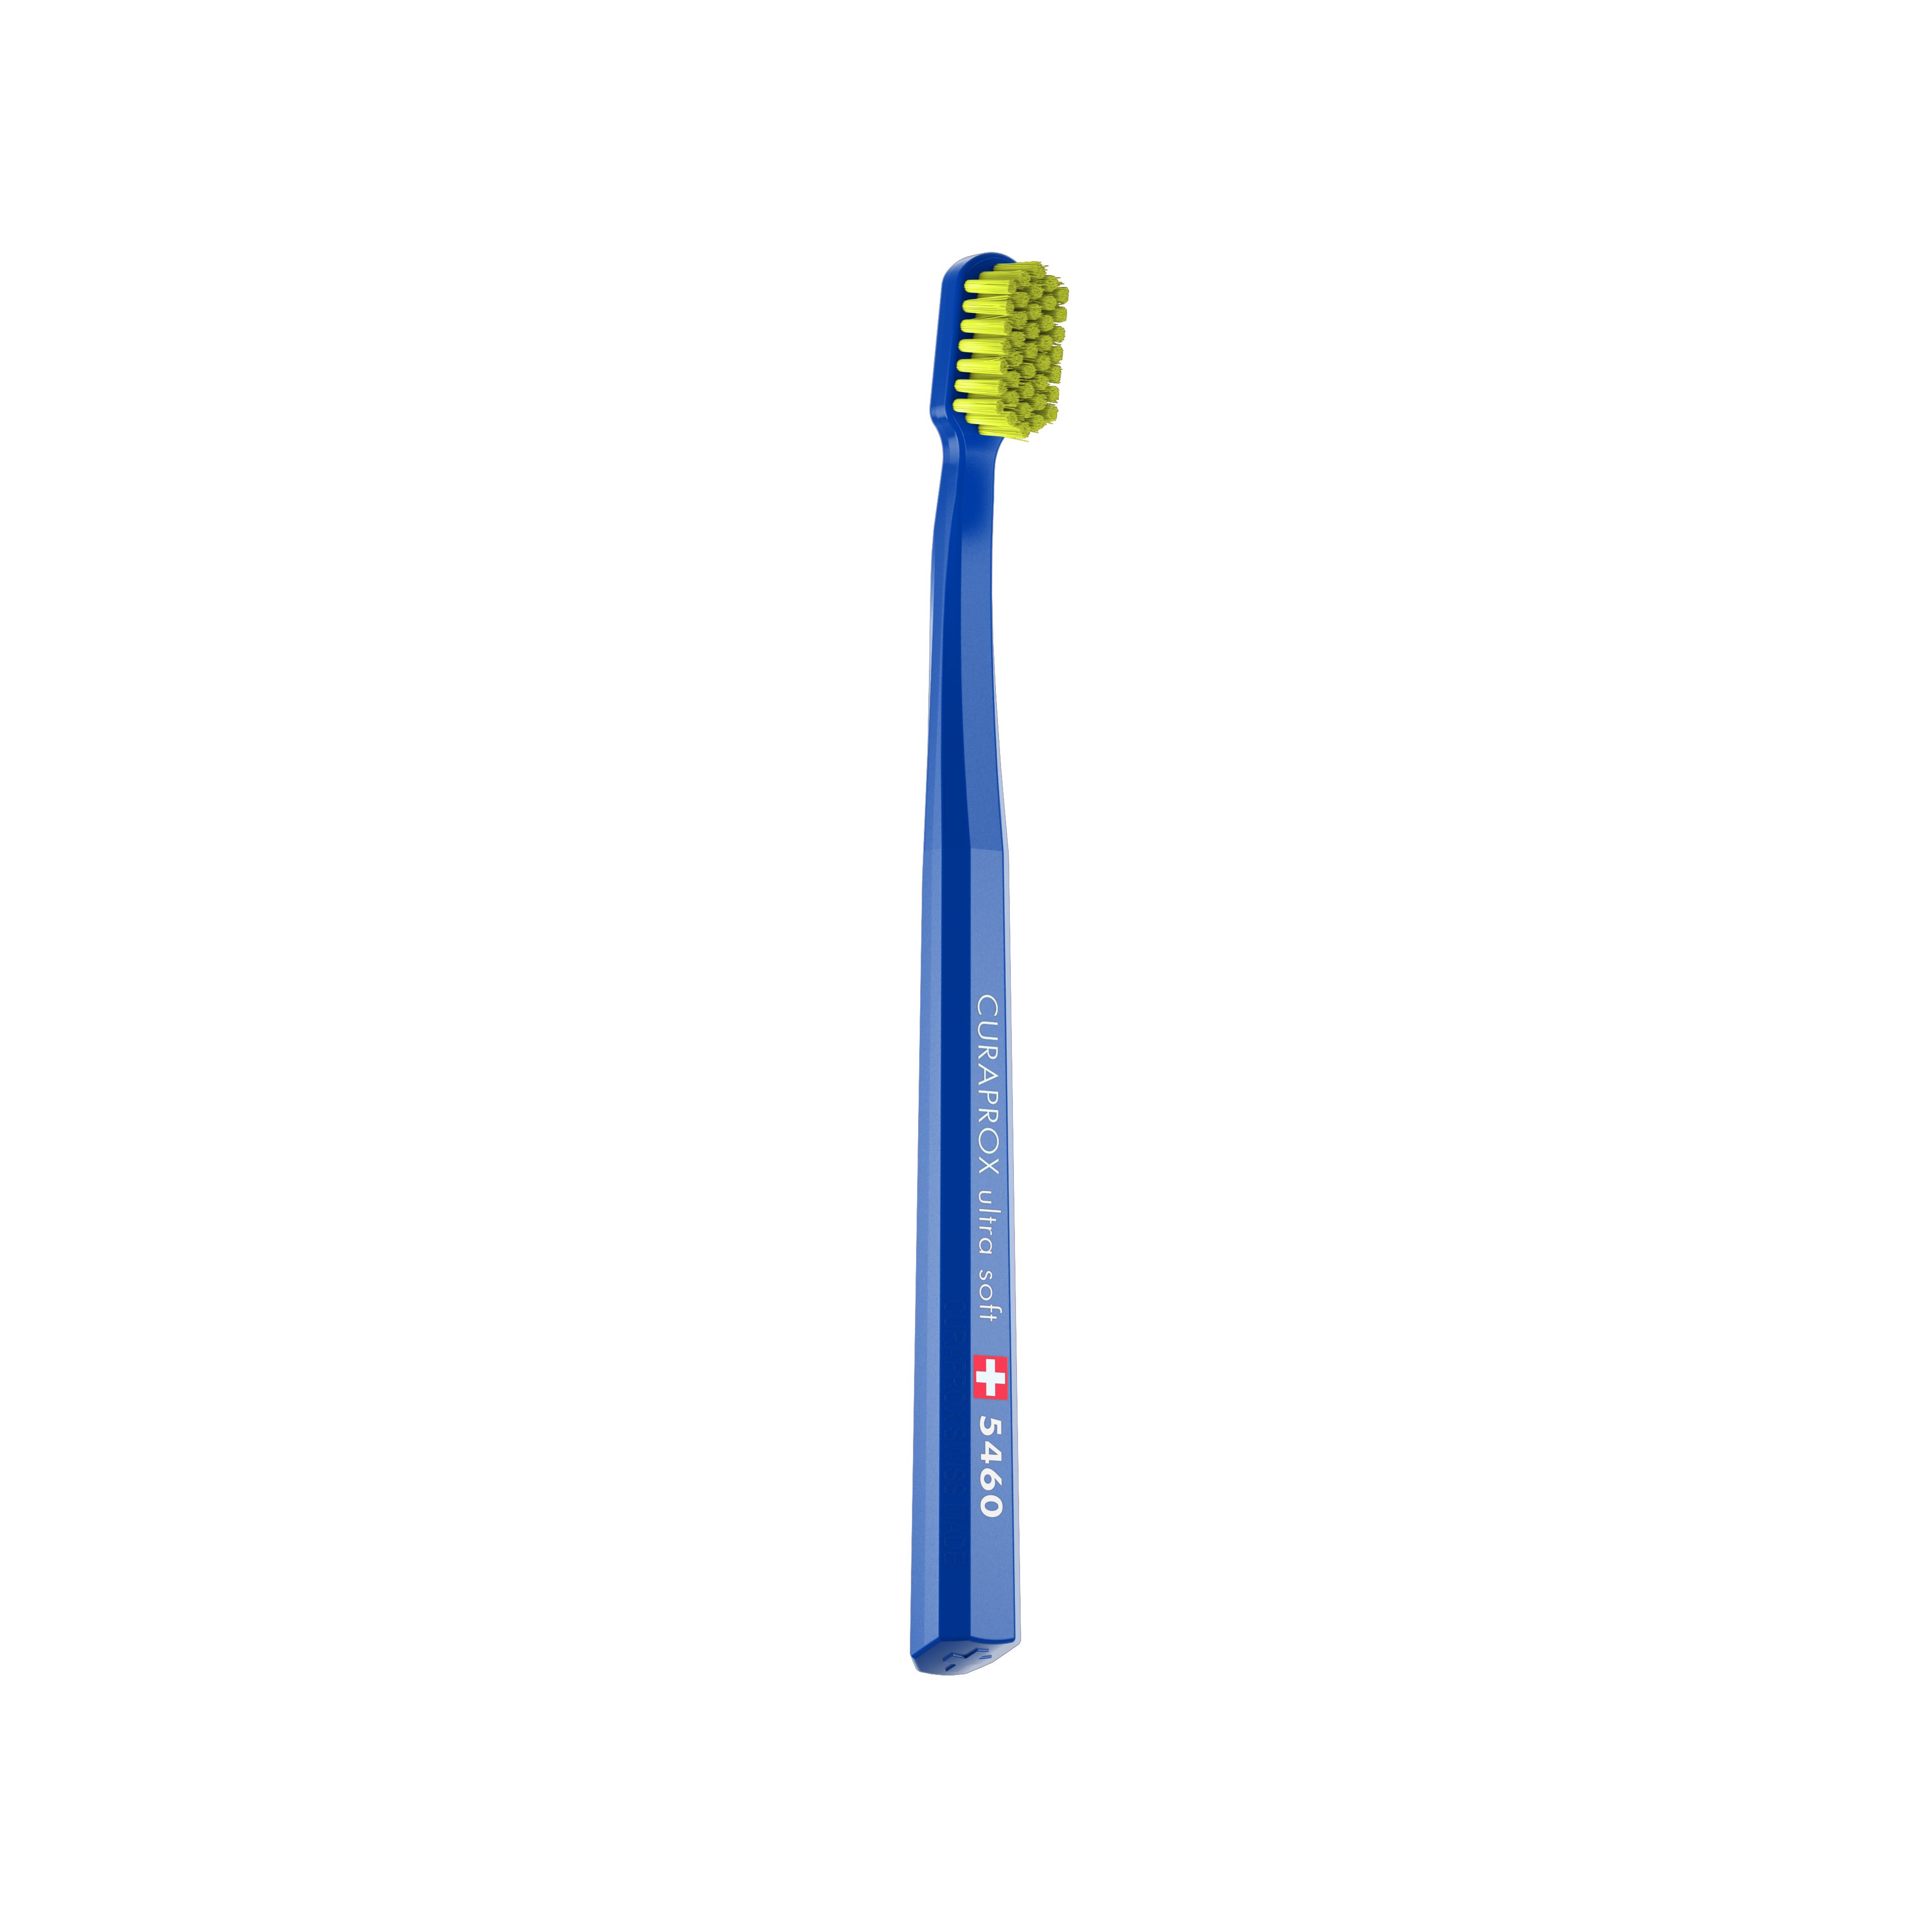 Productshot Toothbrush Cs5460 Dark Blue Green 45 Degree Right